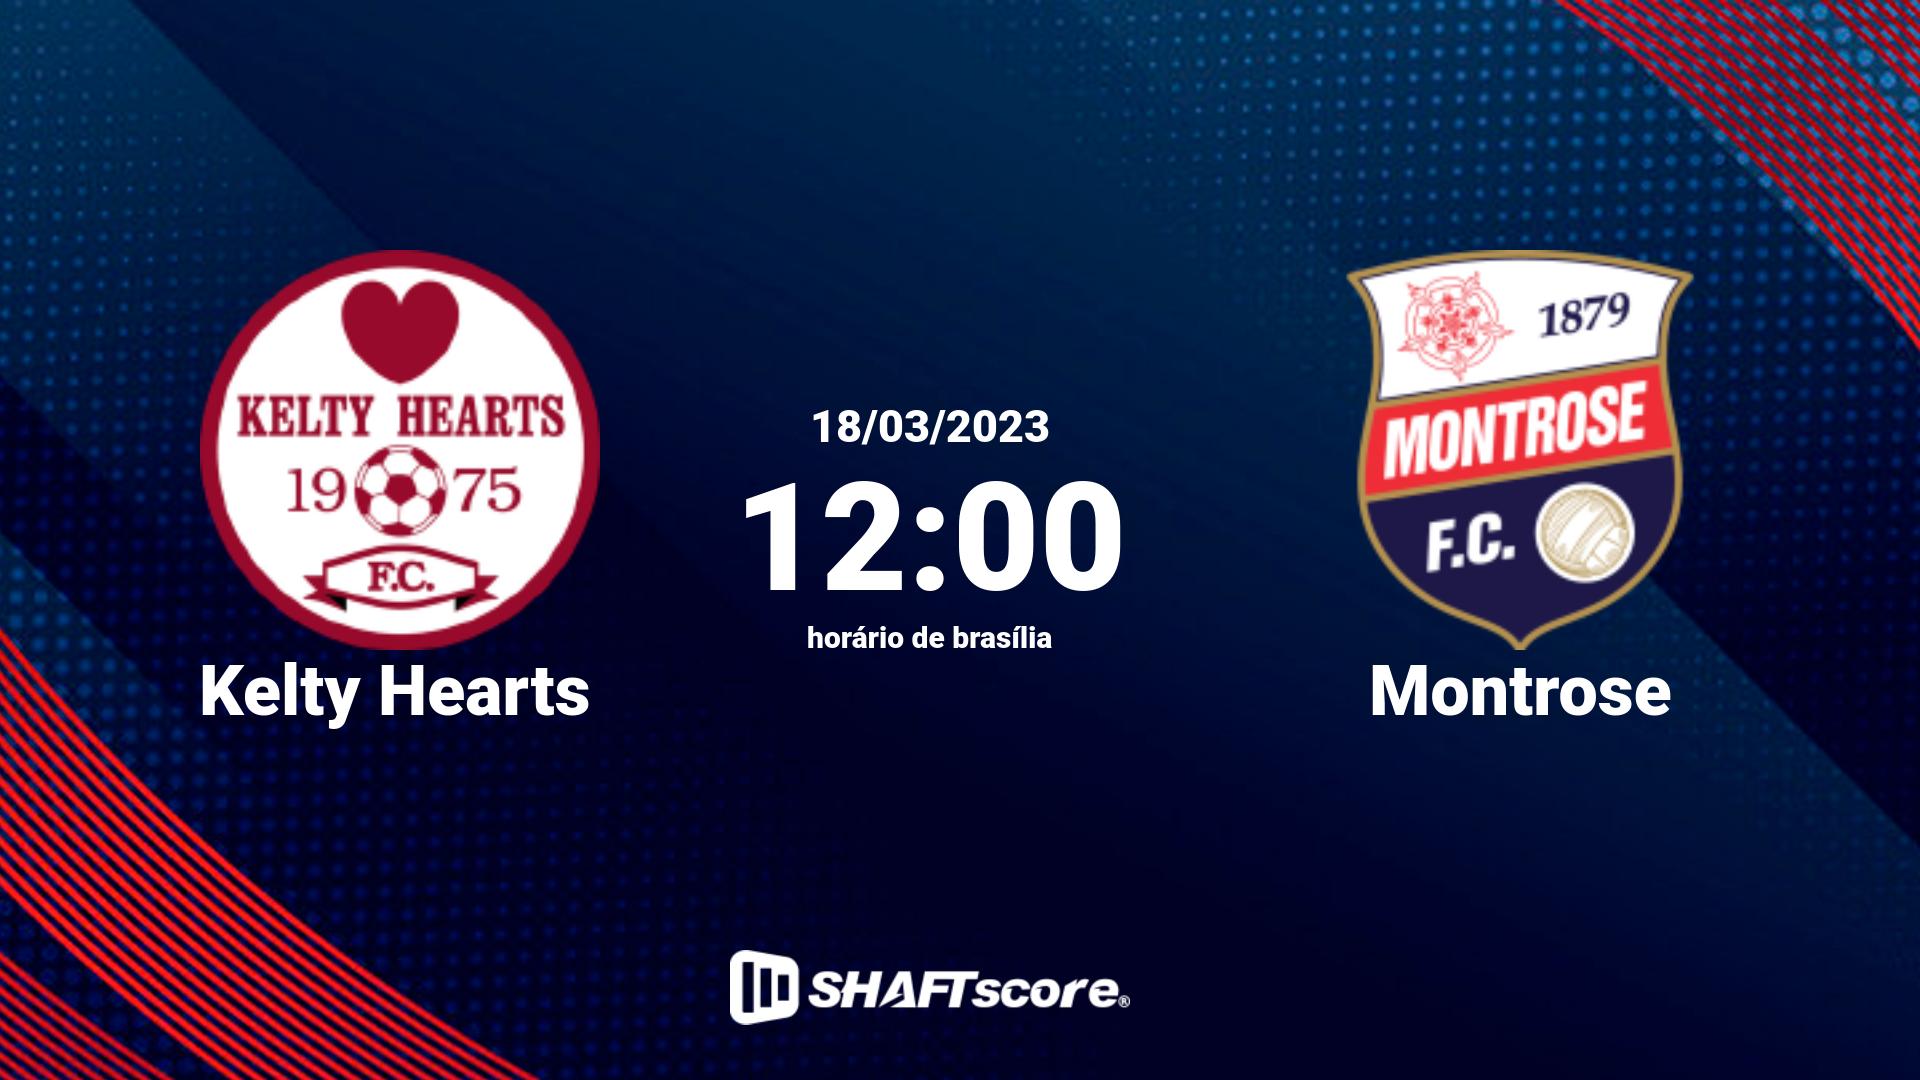 Estatísticas do jogo Kelty Hearts vs Montrose 18.03 12:00